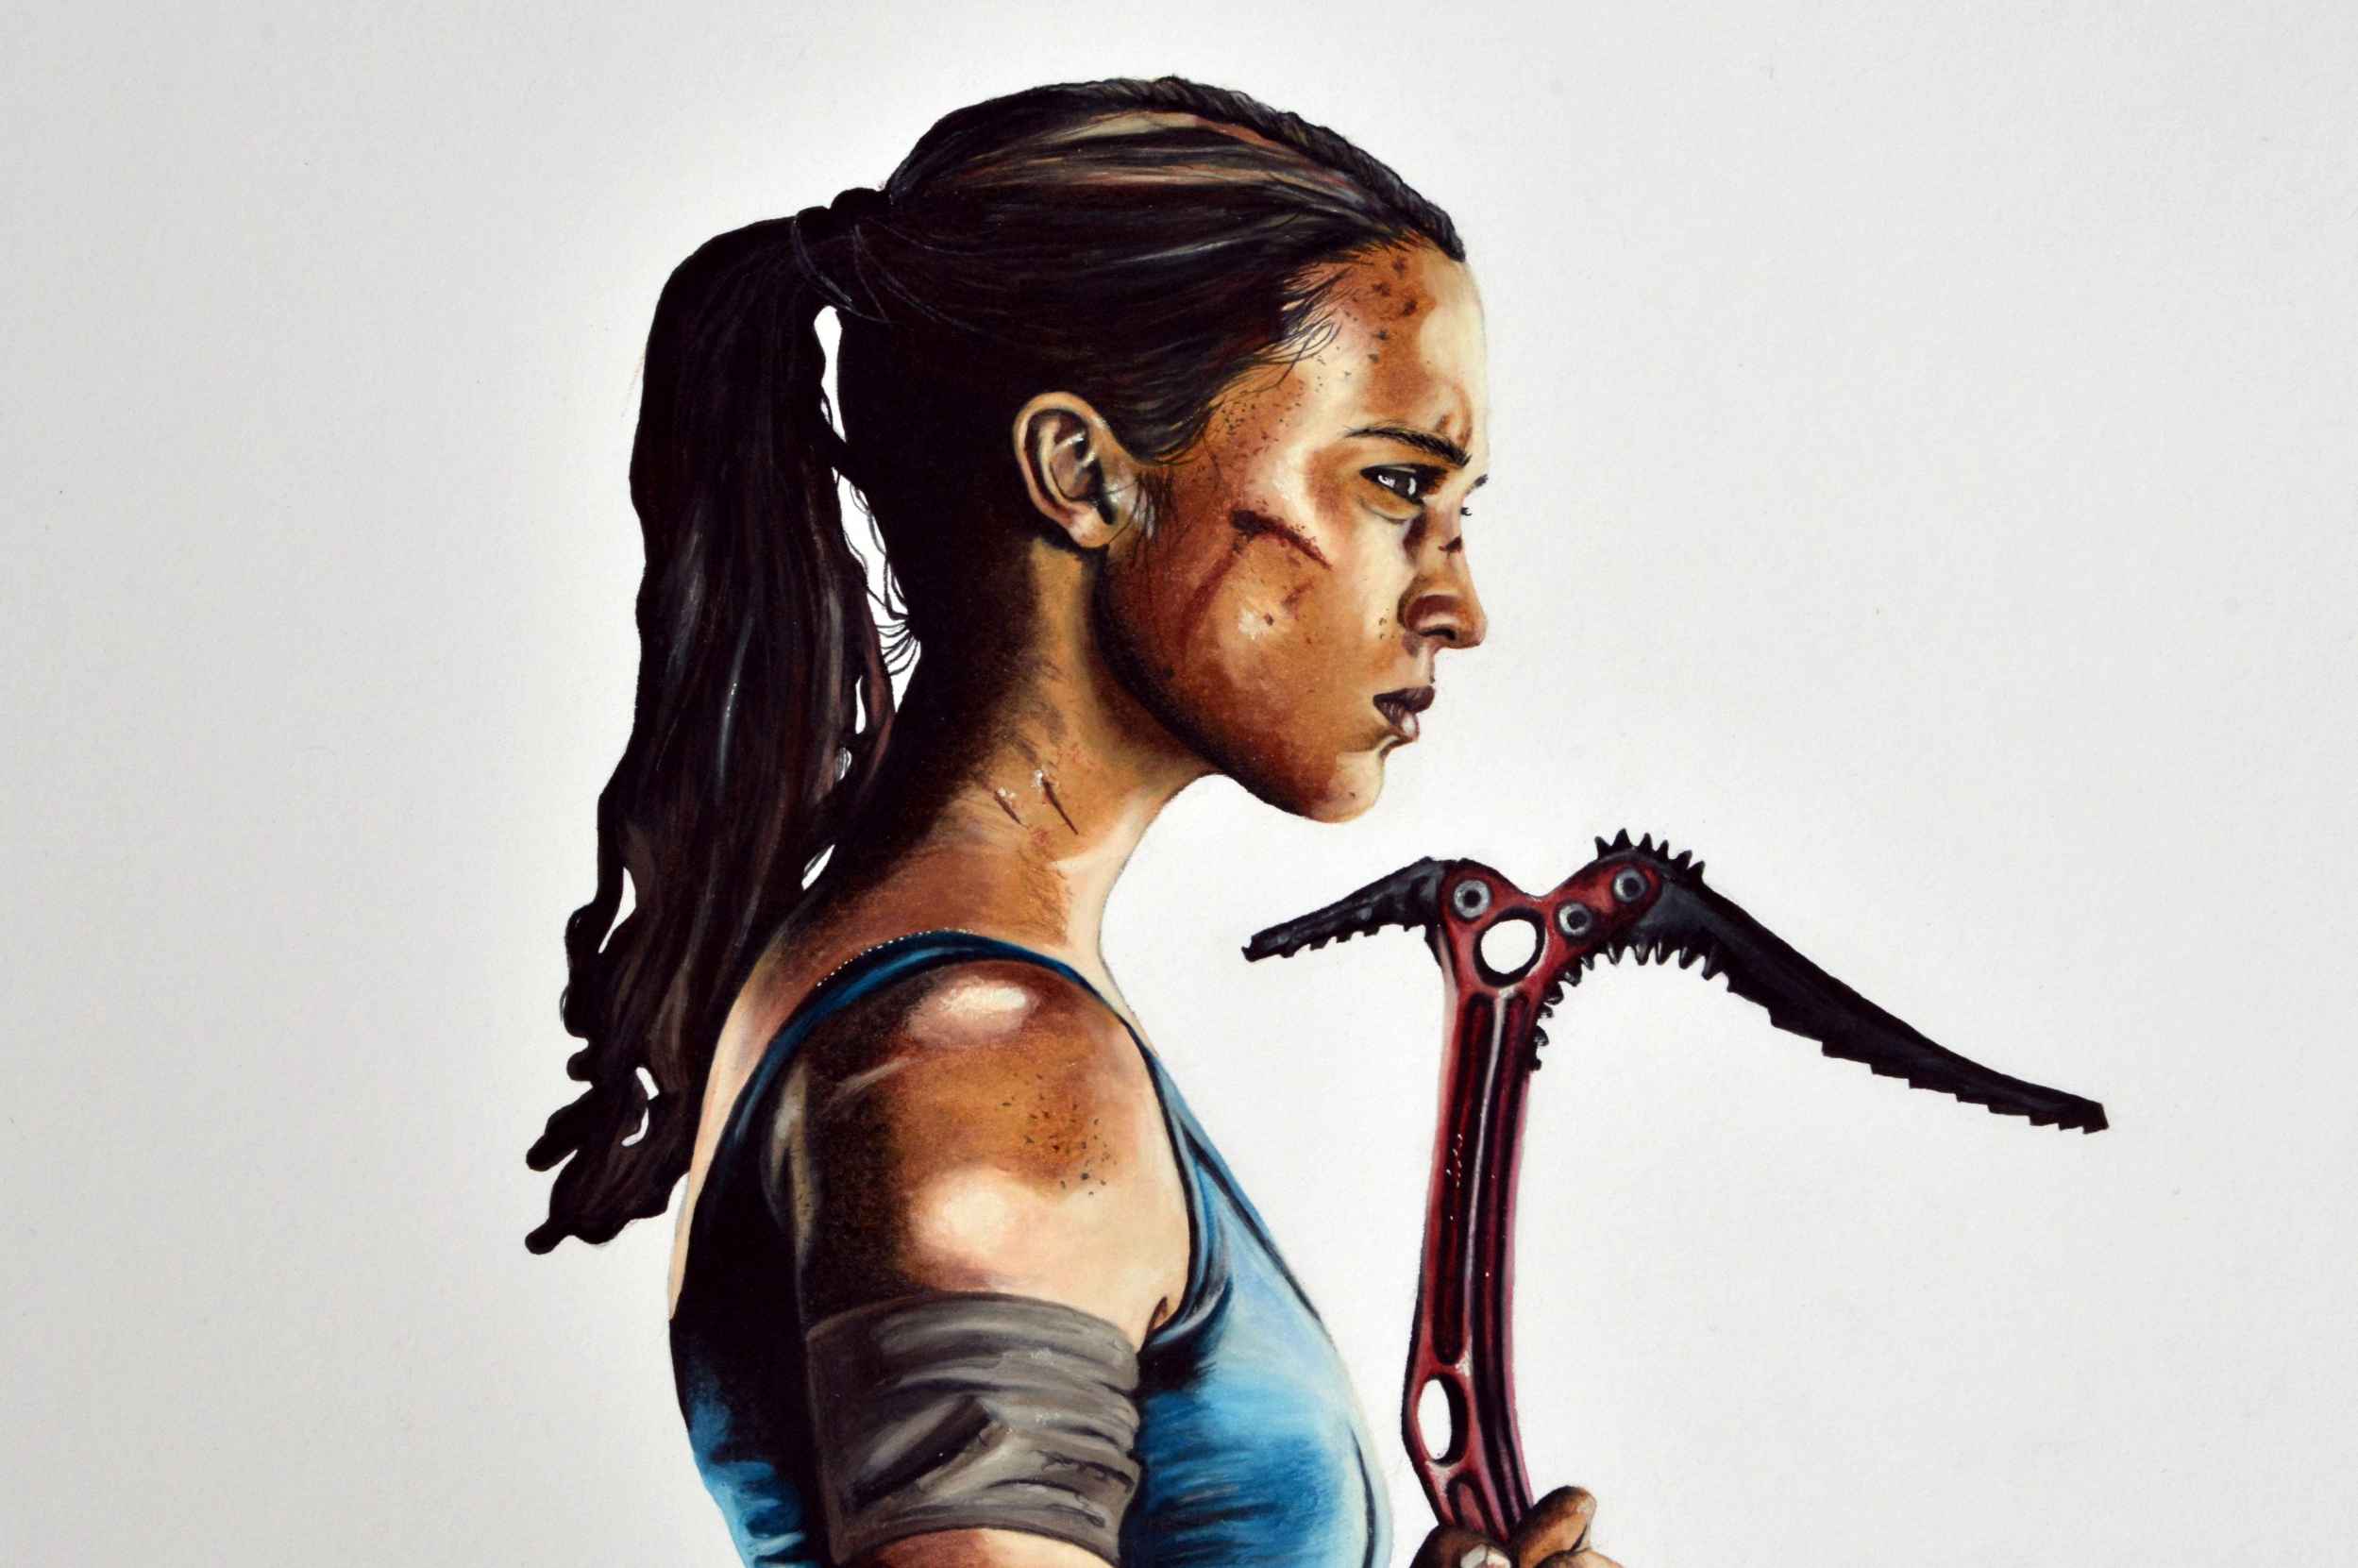 Portfolio Drawing - Tomb Raider (Alicia Vikander) - EMANUEL SCHWEIZER